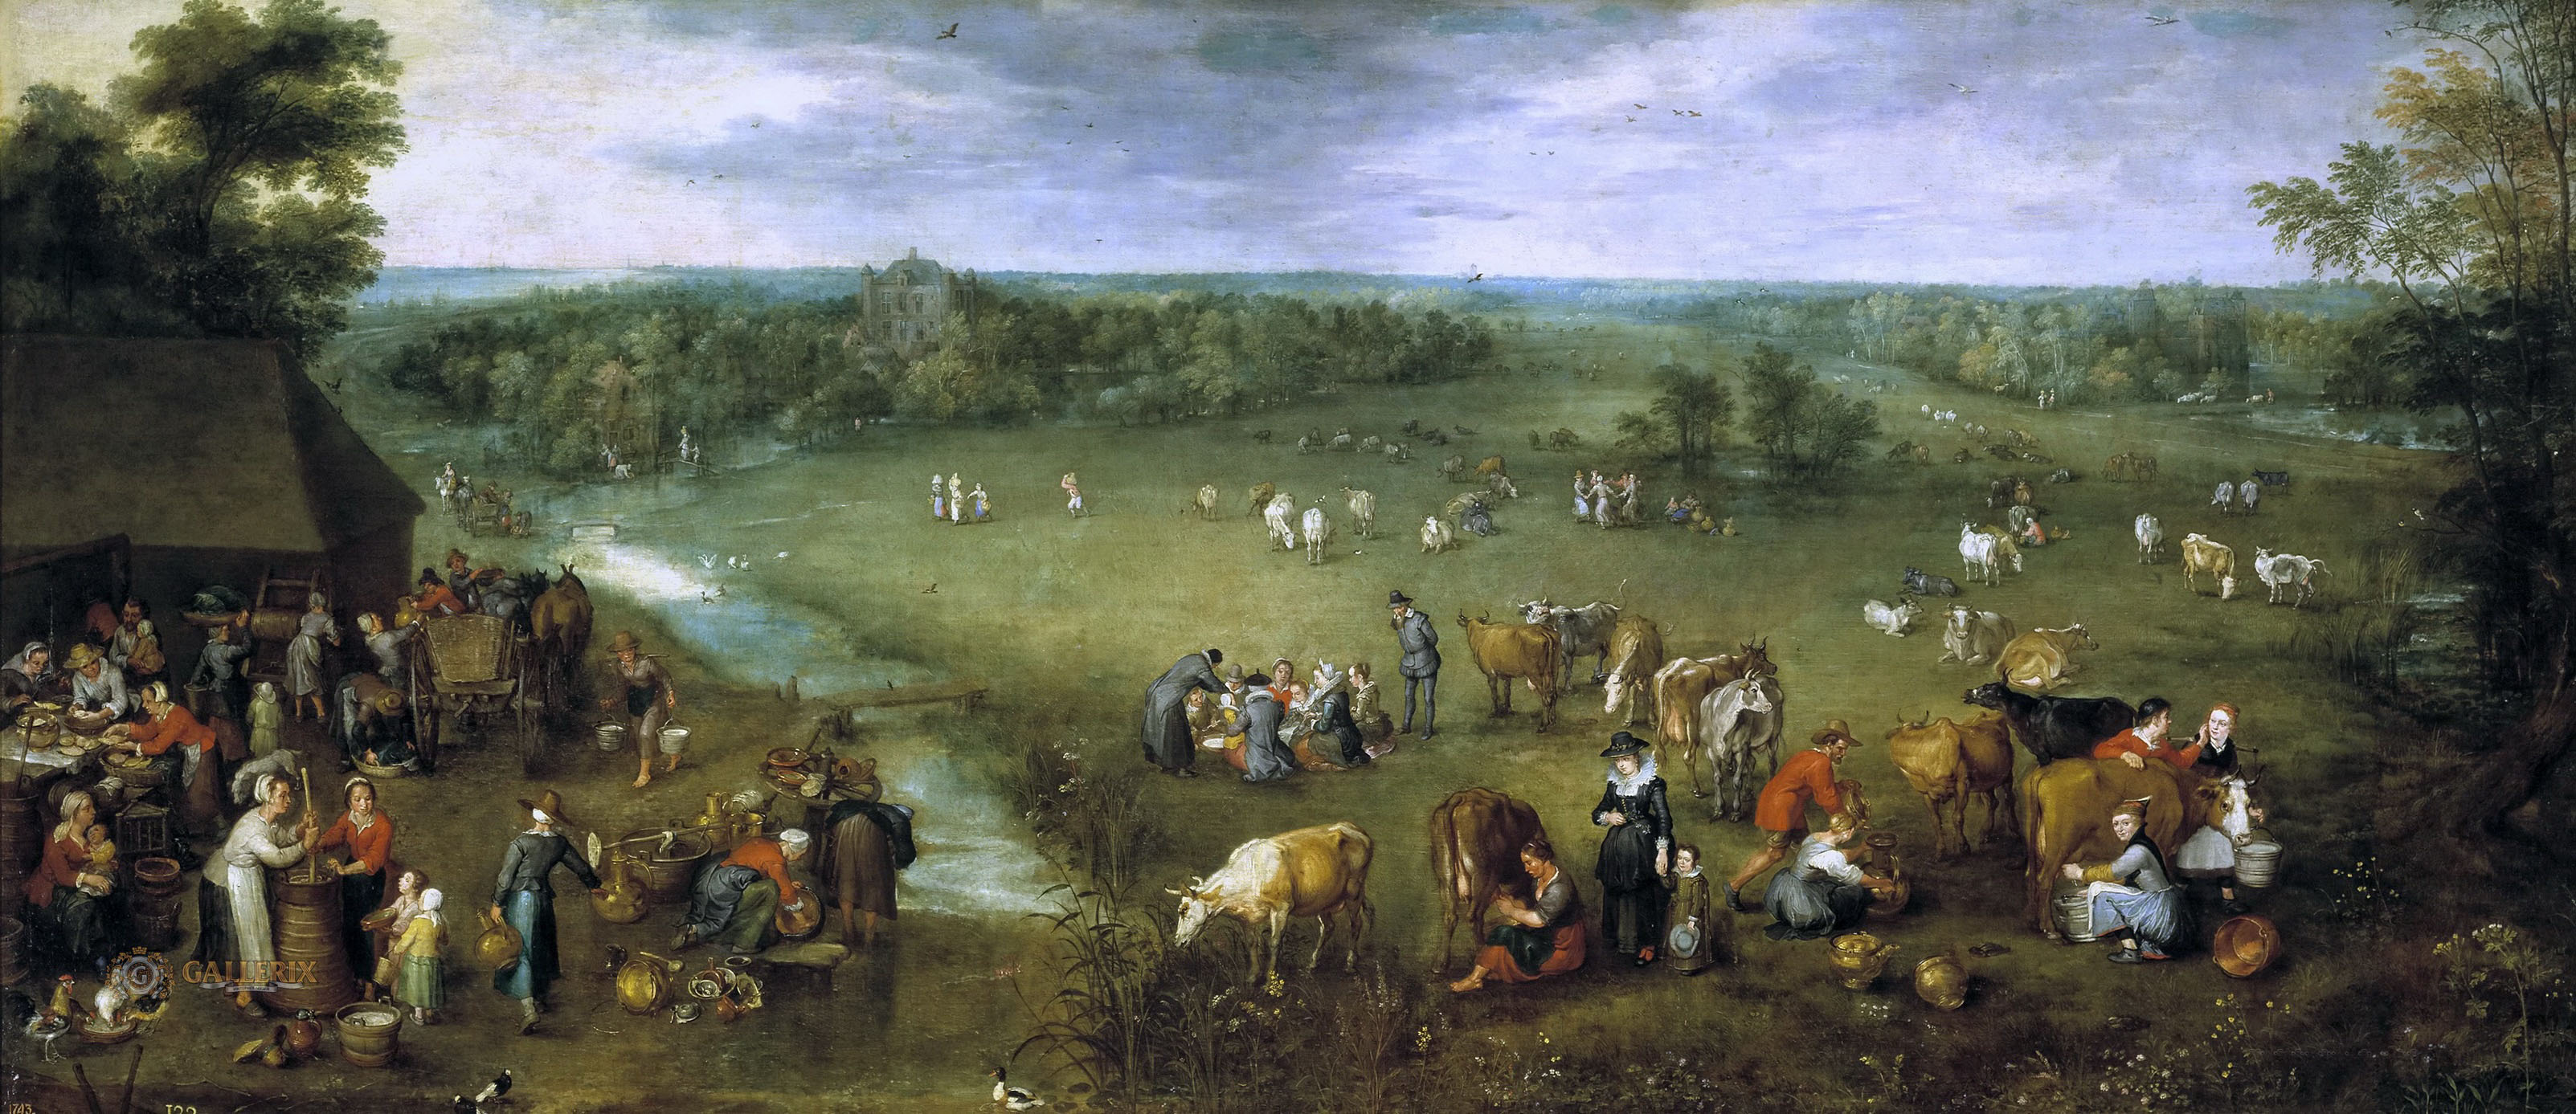 Ян Брейгель Старший. "Жизнь фламандской деревни". 1621. Прадо, Мадрид.